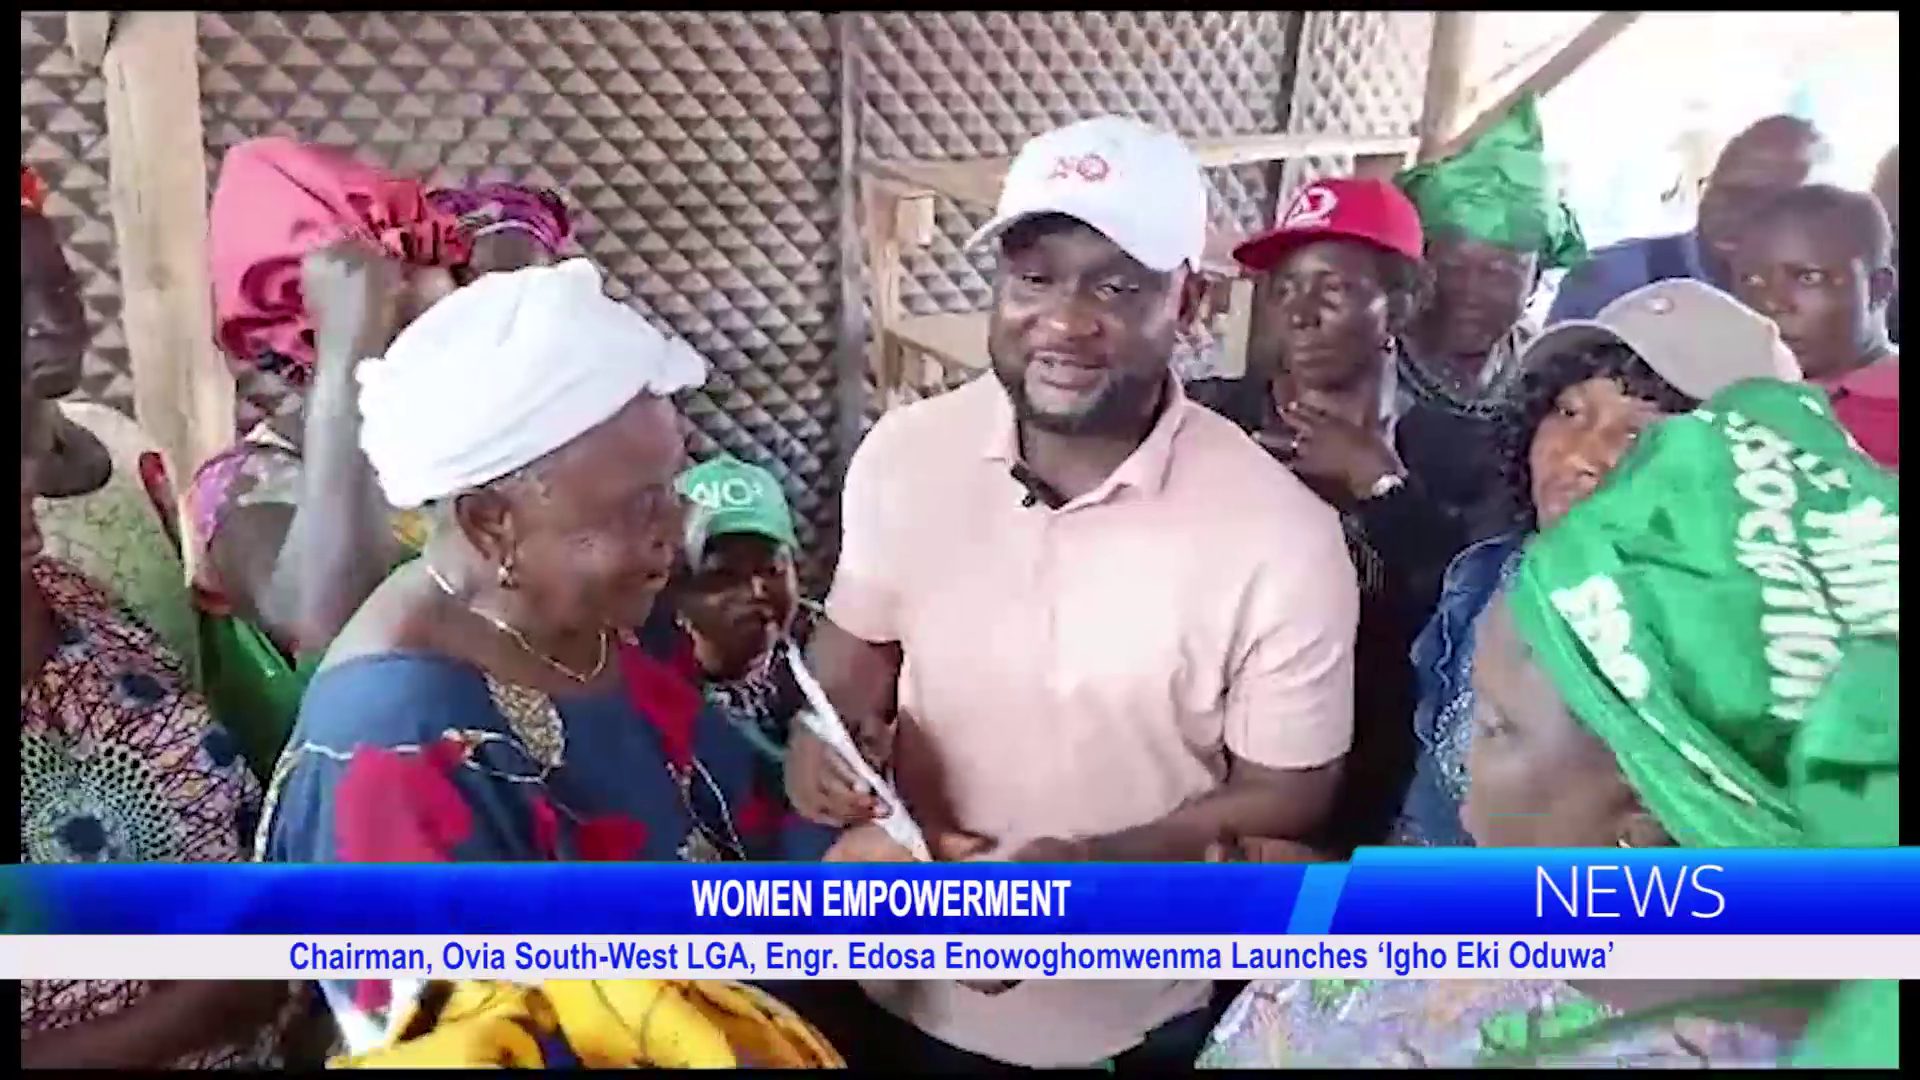 Chairman, Ovia South-West LGA, Launches ‘Igho Eki Oduwa’ Empowerment Scheme For Market Women